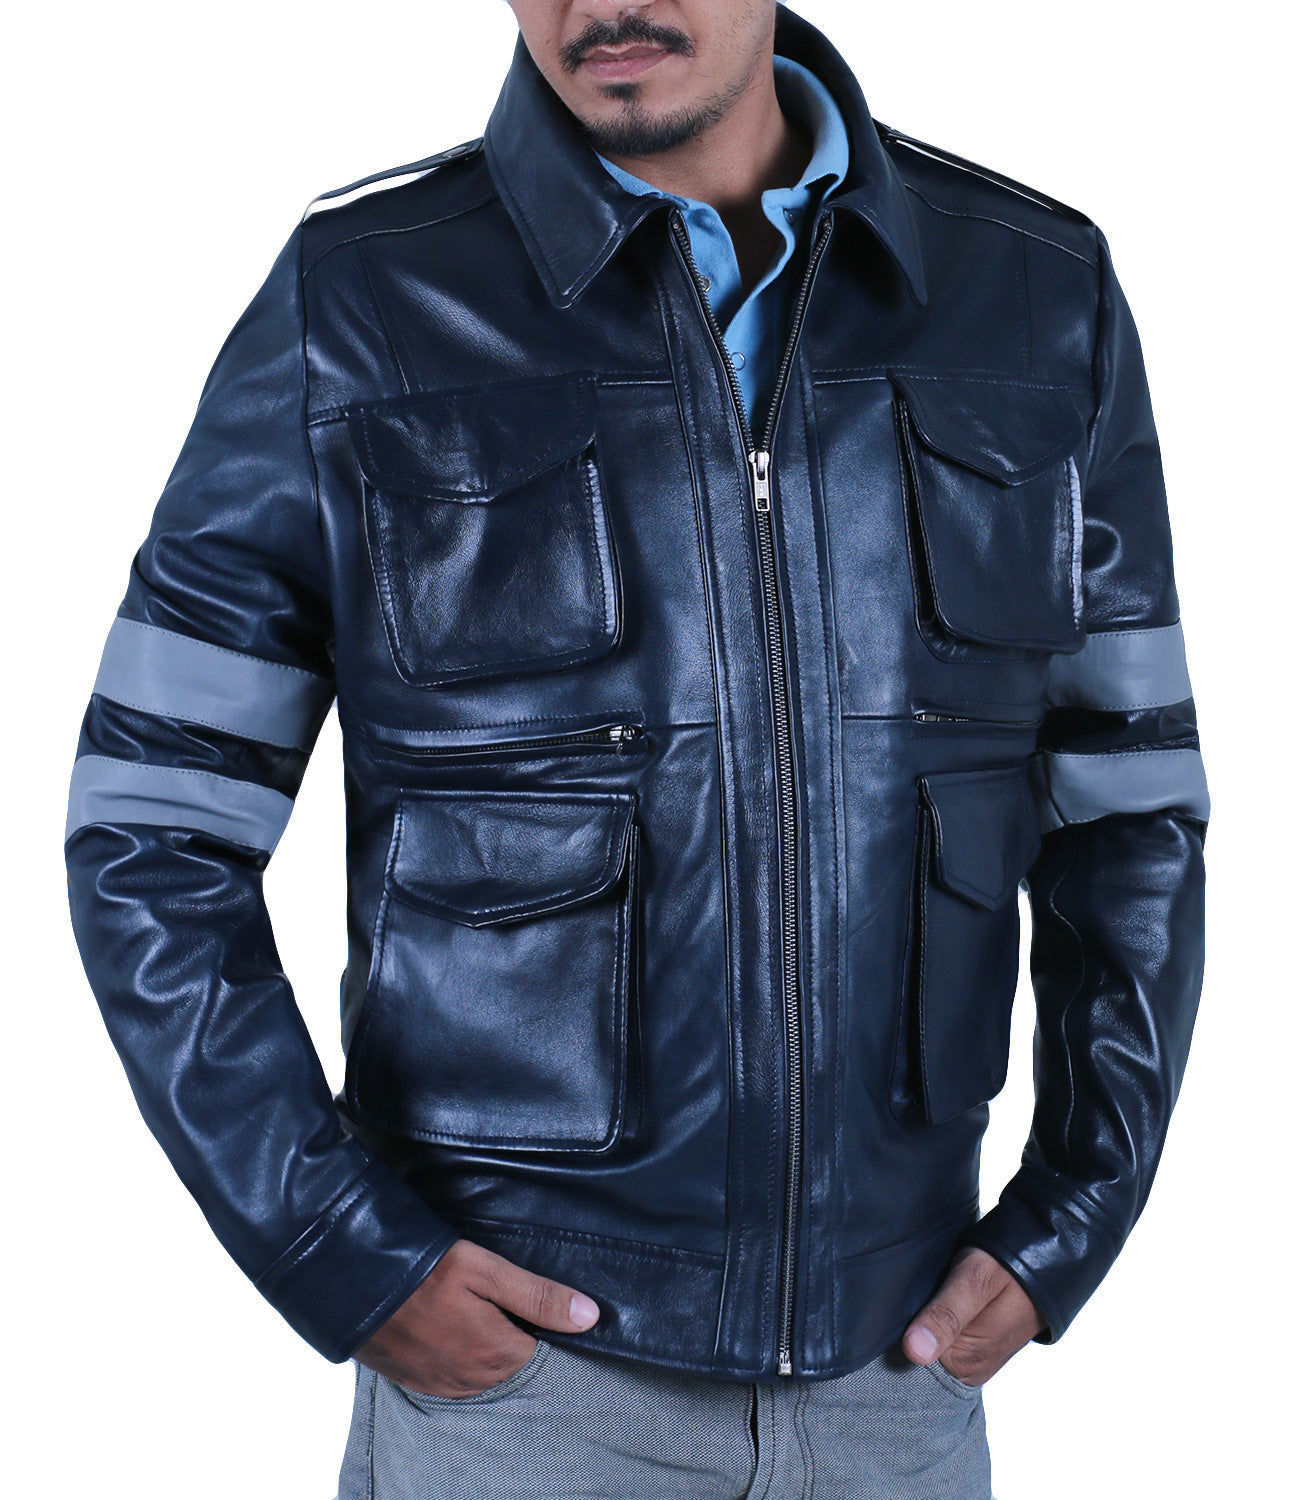 Leather Jackets Hub Mens Genuine Lambskin Leather Jacket (Black, Field Jacket) - 1501127